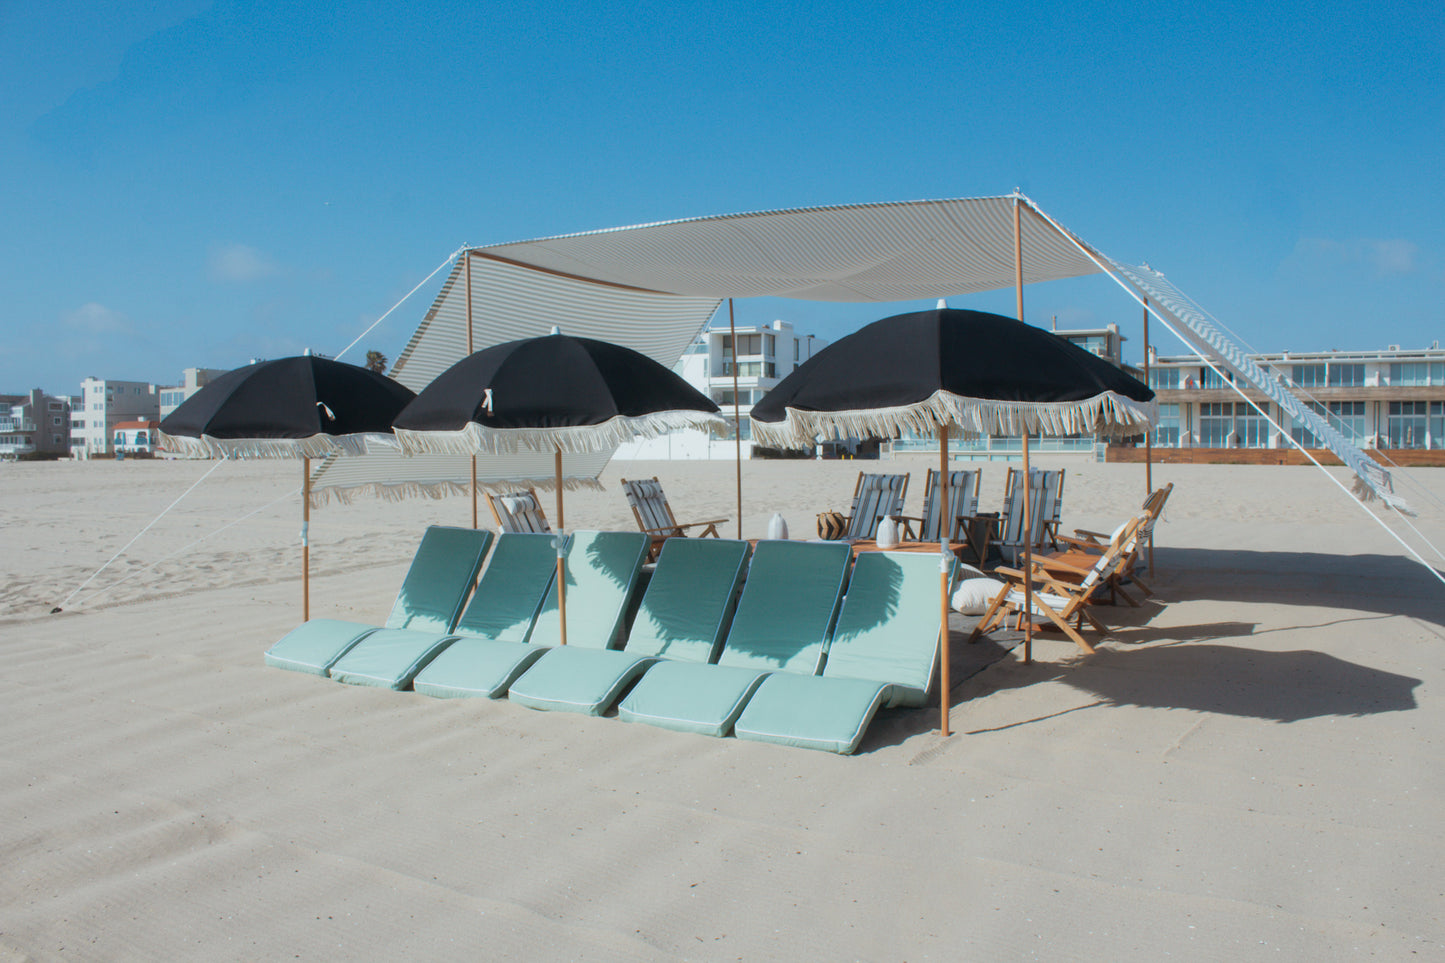 Beach cabana rental from The Beach Oasis with beach lounges, beach umbrellas, and beach chairs on a Los Angeles beach